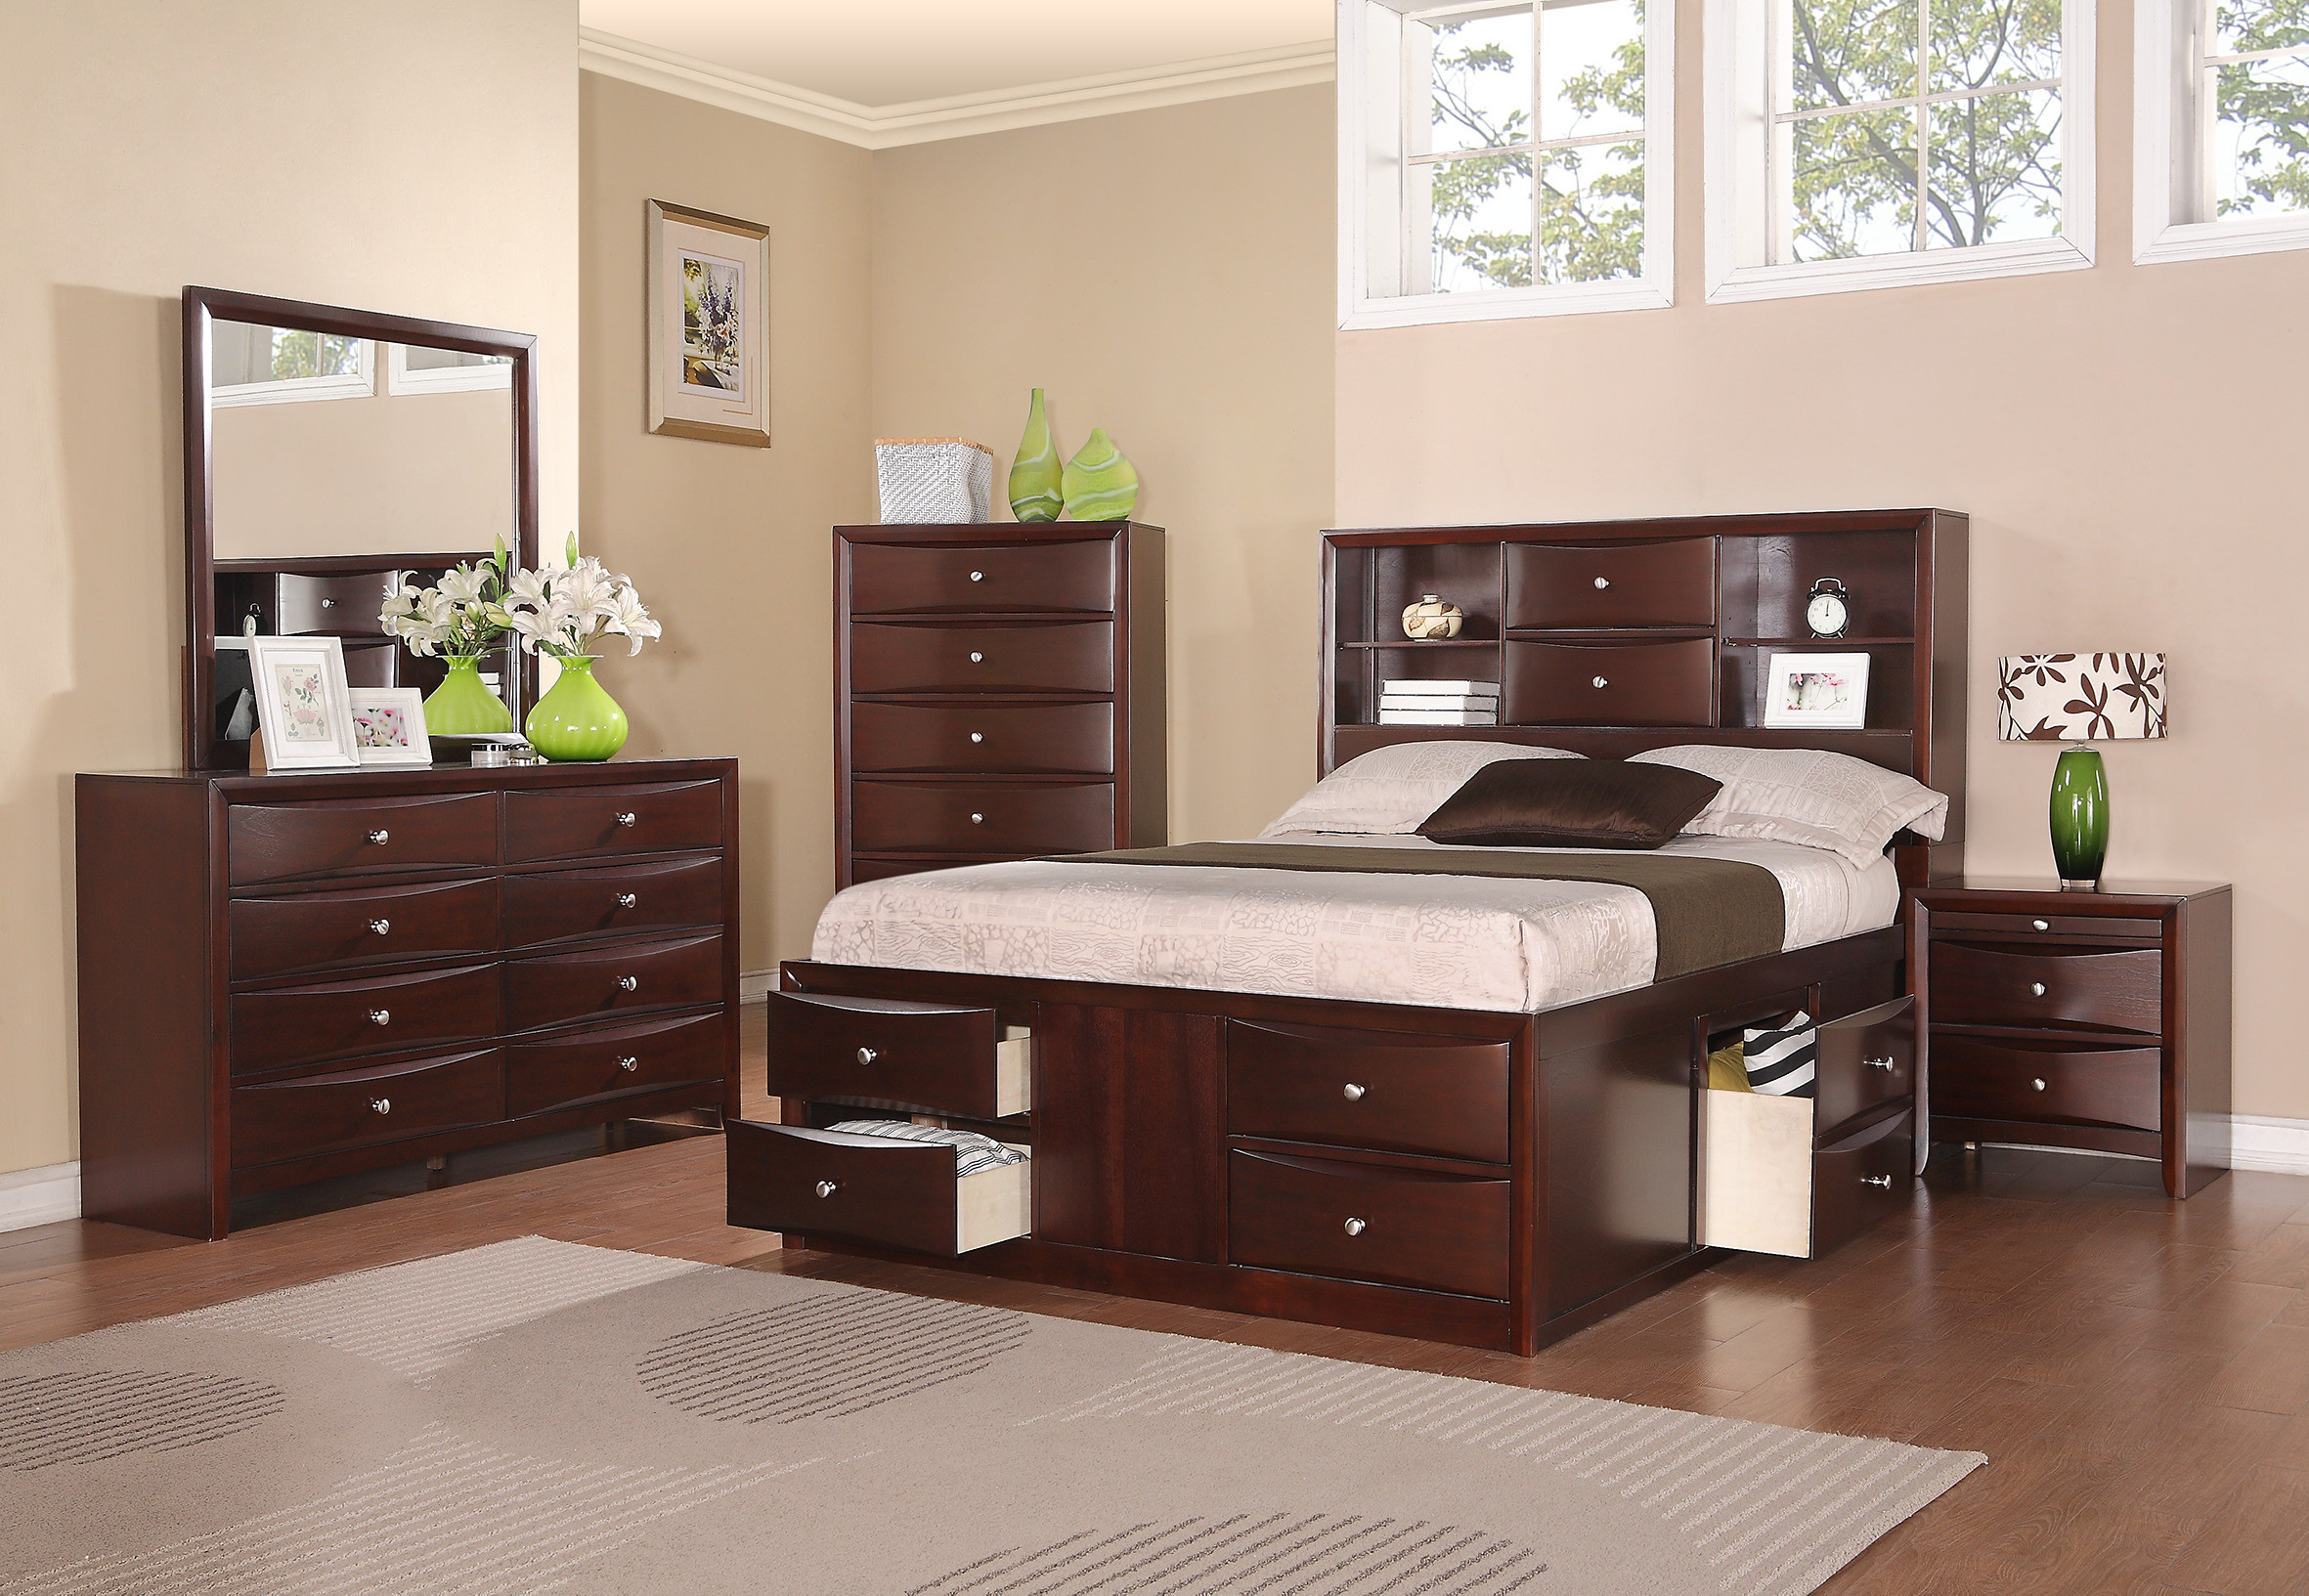 King Size Storage Bedroom Set
 Bedroom Furniture Storage Drawers HB FB California King